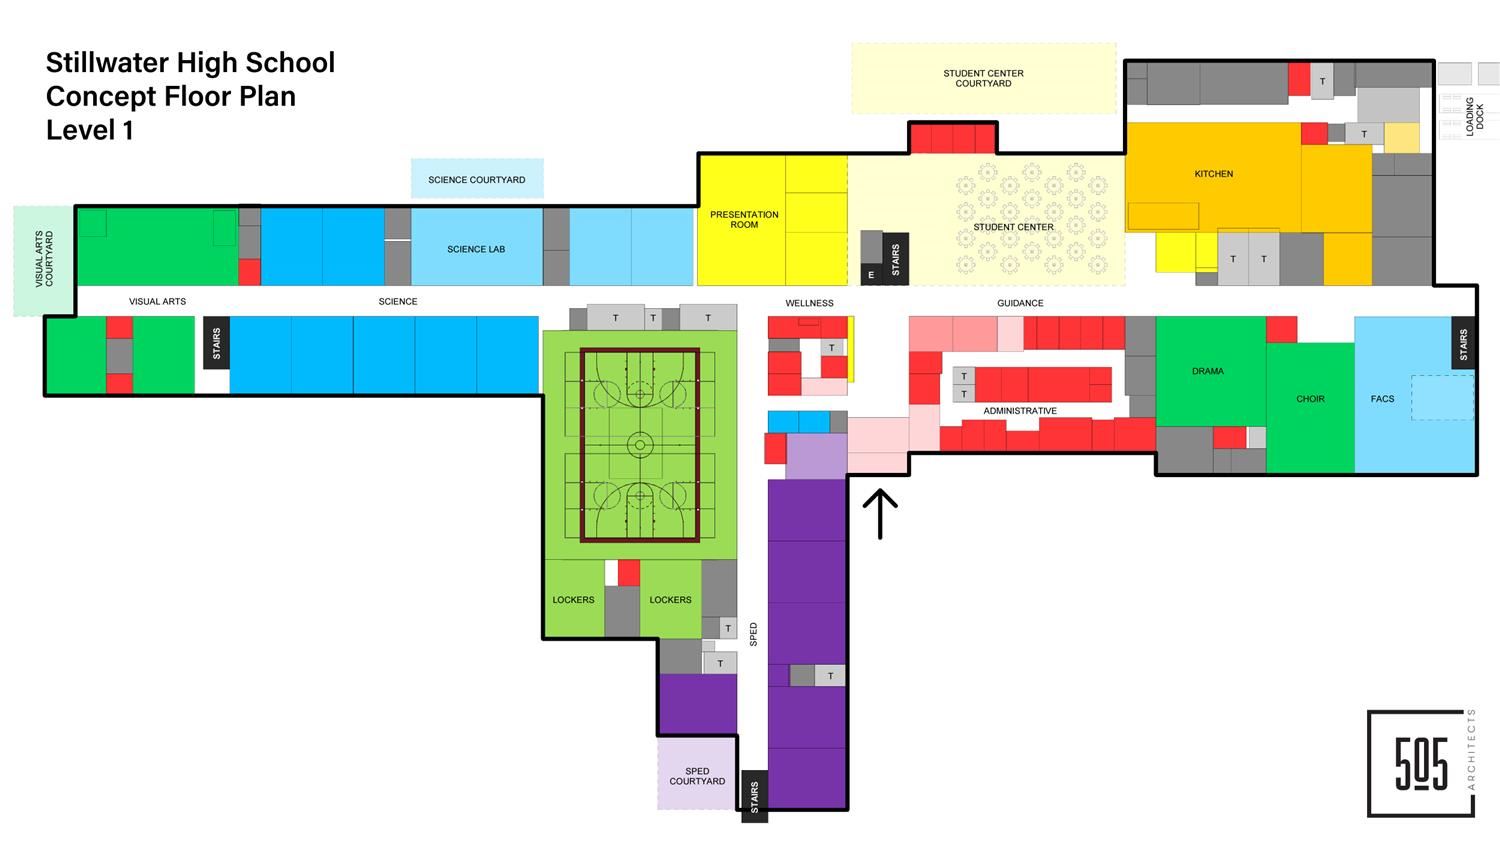 SHS Concept Floor Plan Level 1